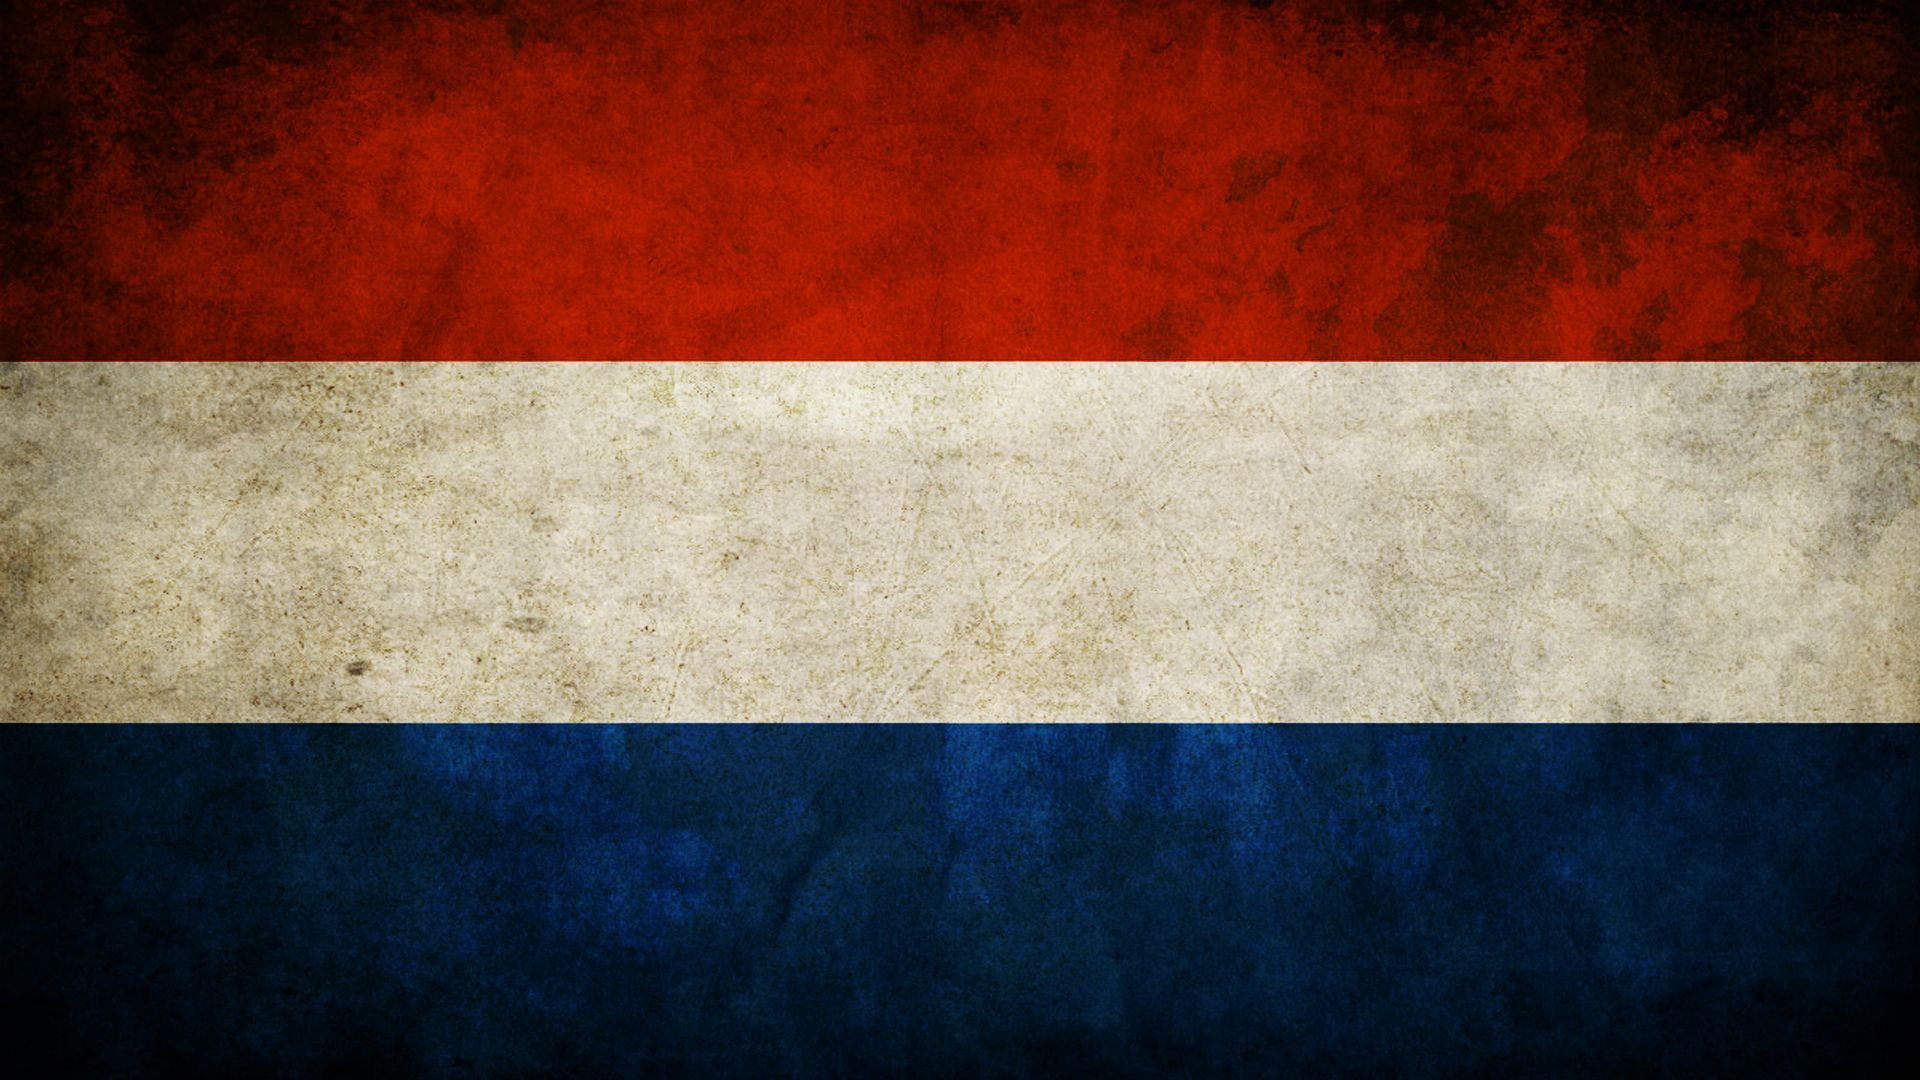 Netherlands Flag Wallpapers